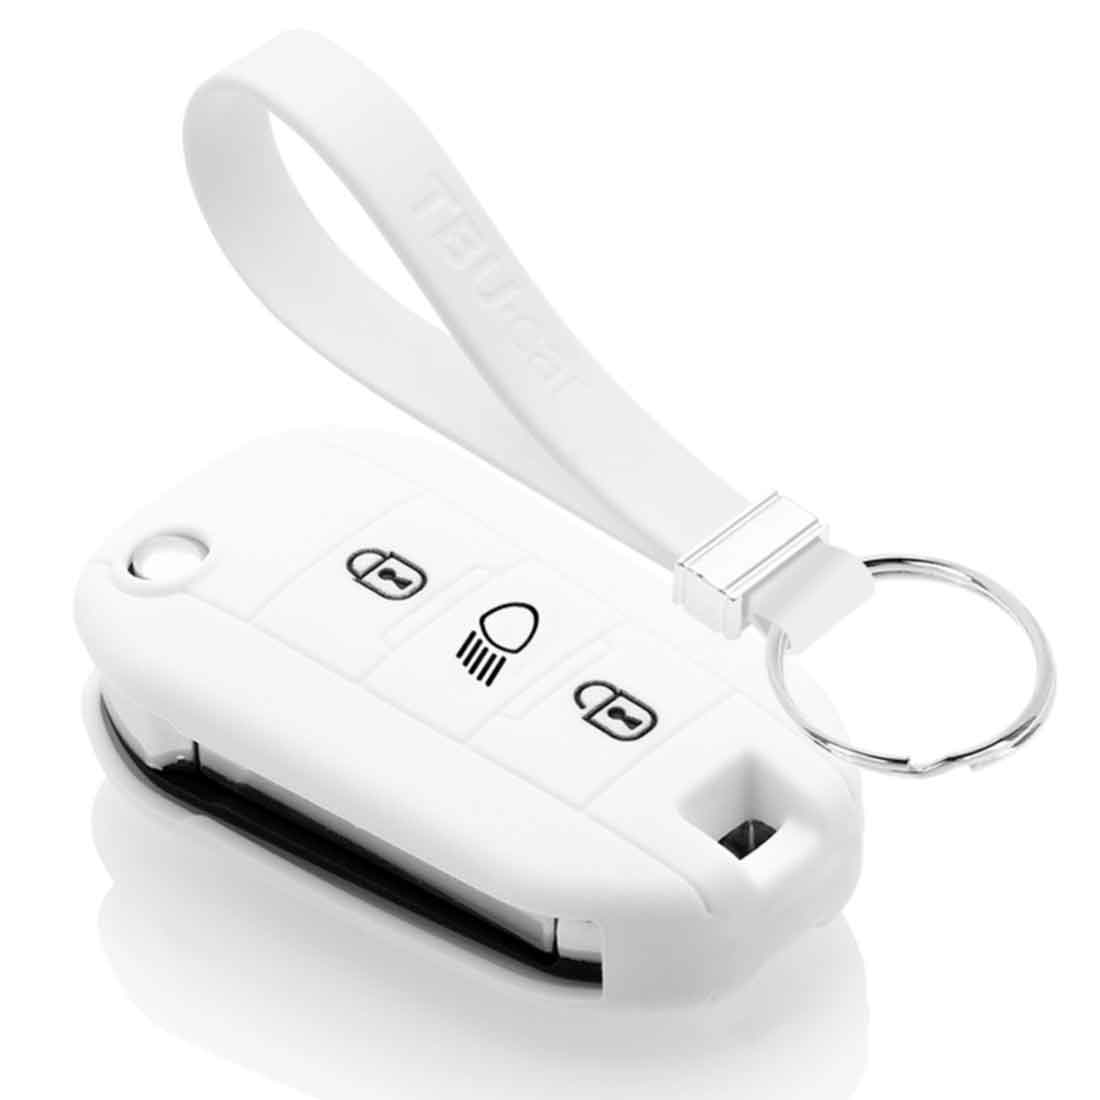 TBU car TBU car Car key cover compatible with Citroën - Silicone Protective Remote Key Shell - FOB Case Cover - White